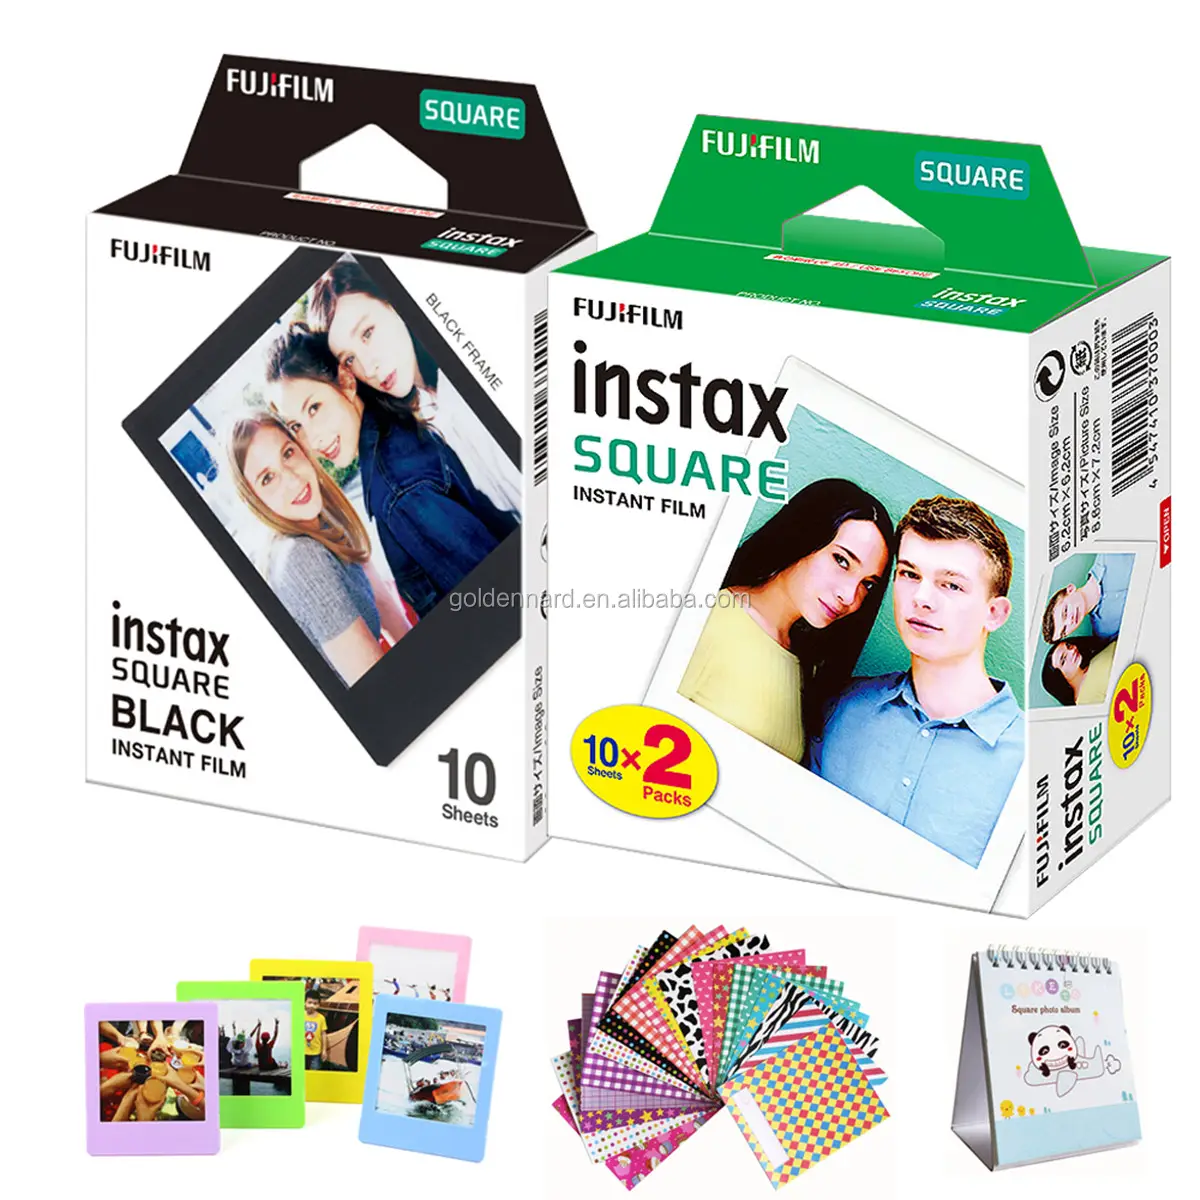 FujiFilm Instax Square Instant Film 20 Photo Sheets White + 10 Sheets Black Edge- Compatible Compatible with FujiFilm Instax SQ